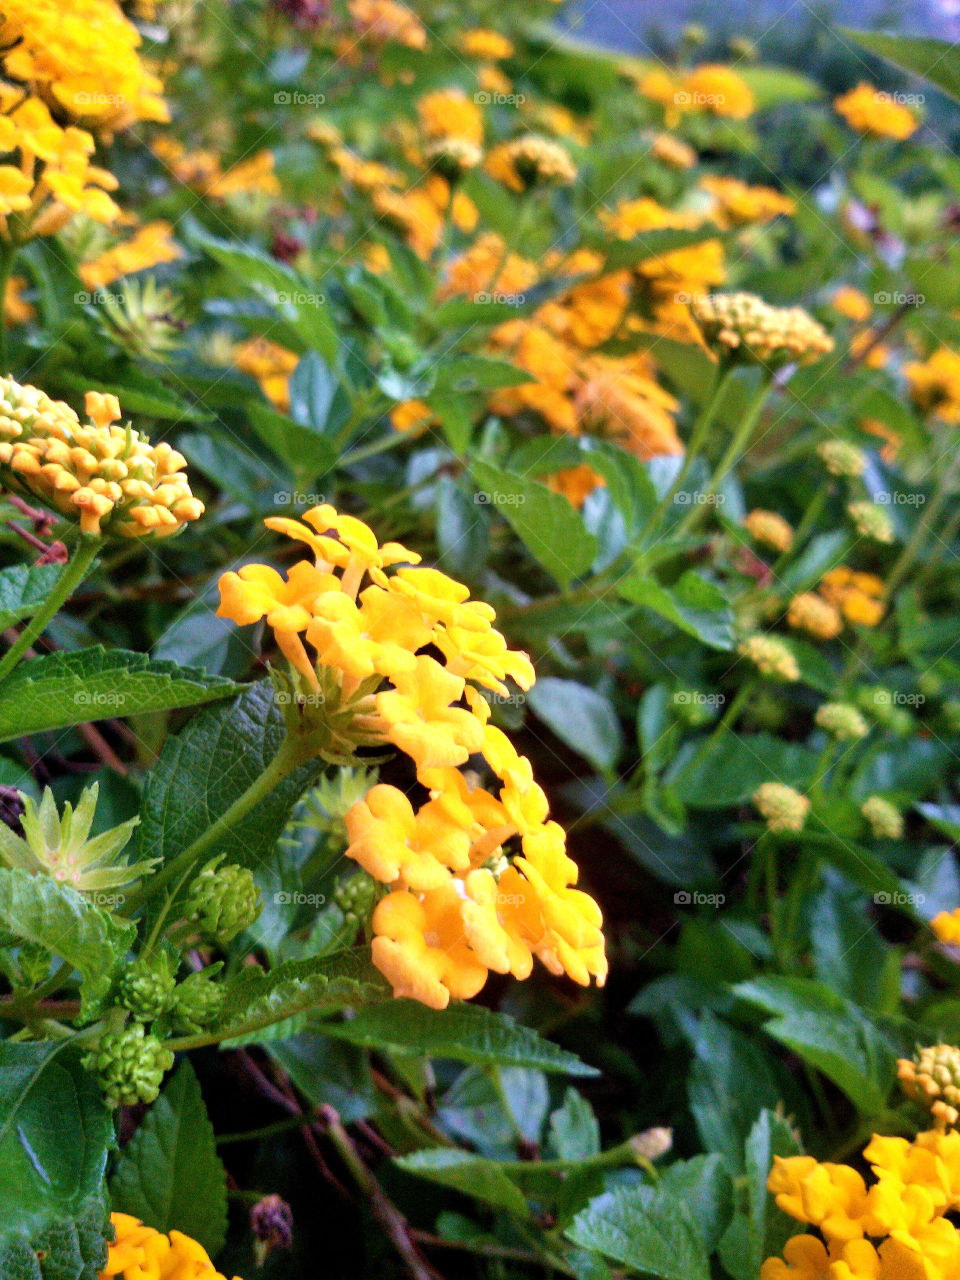 Yellow Flower's. Flower in the garden